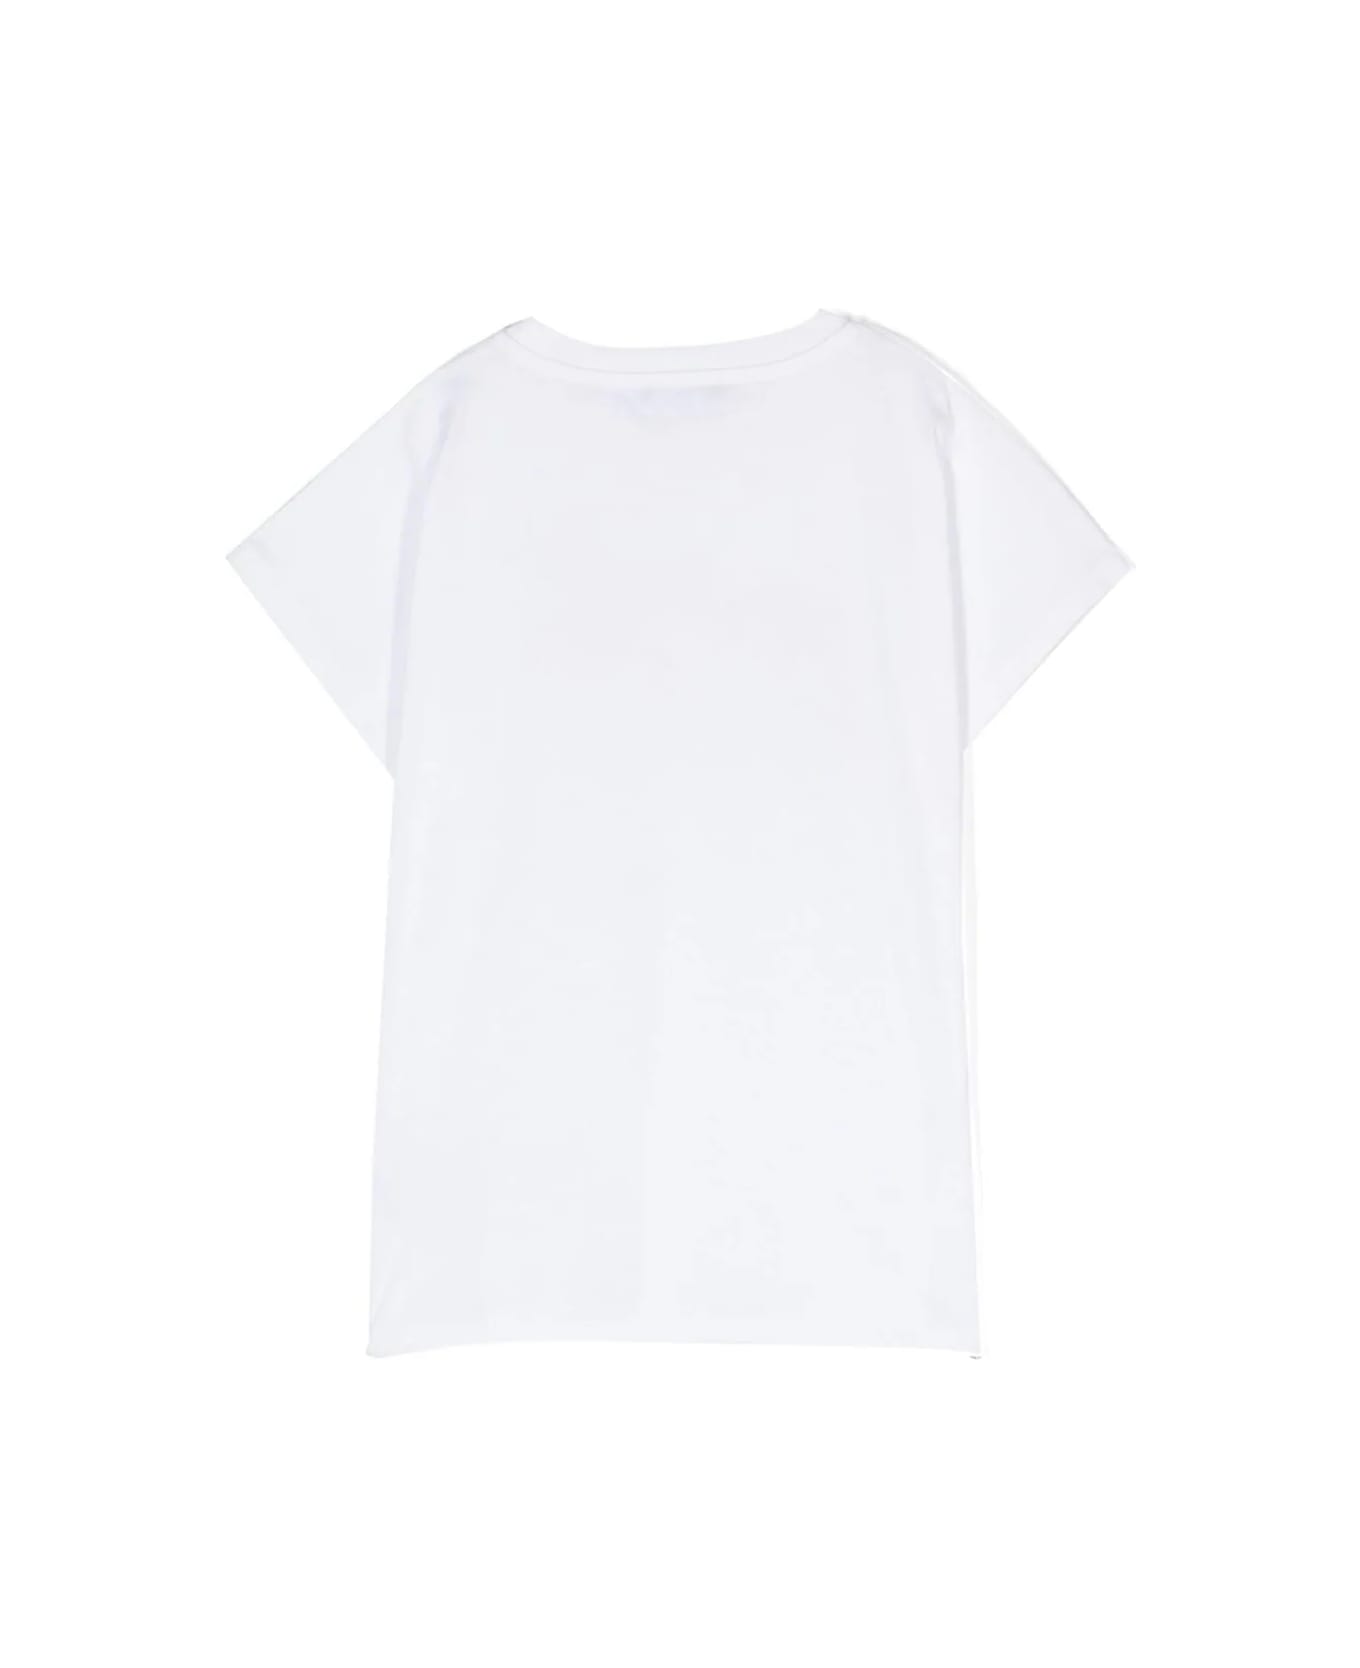 Balmain T-shirt Con Cristalli - White